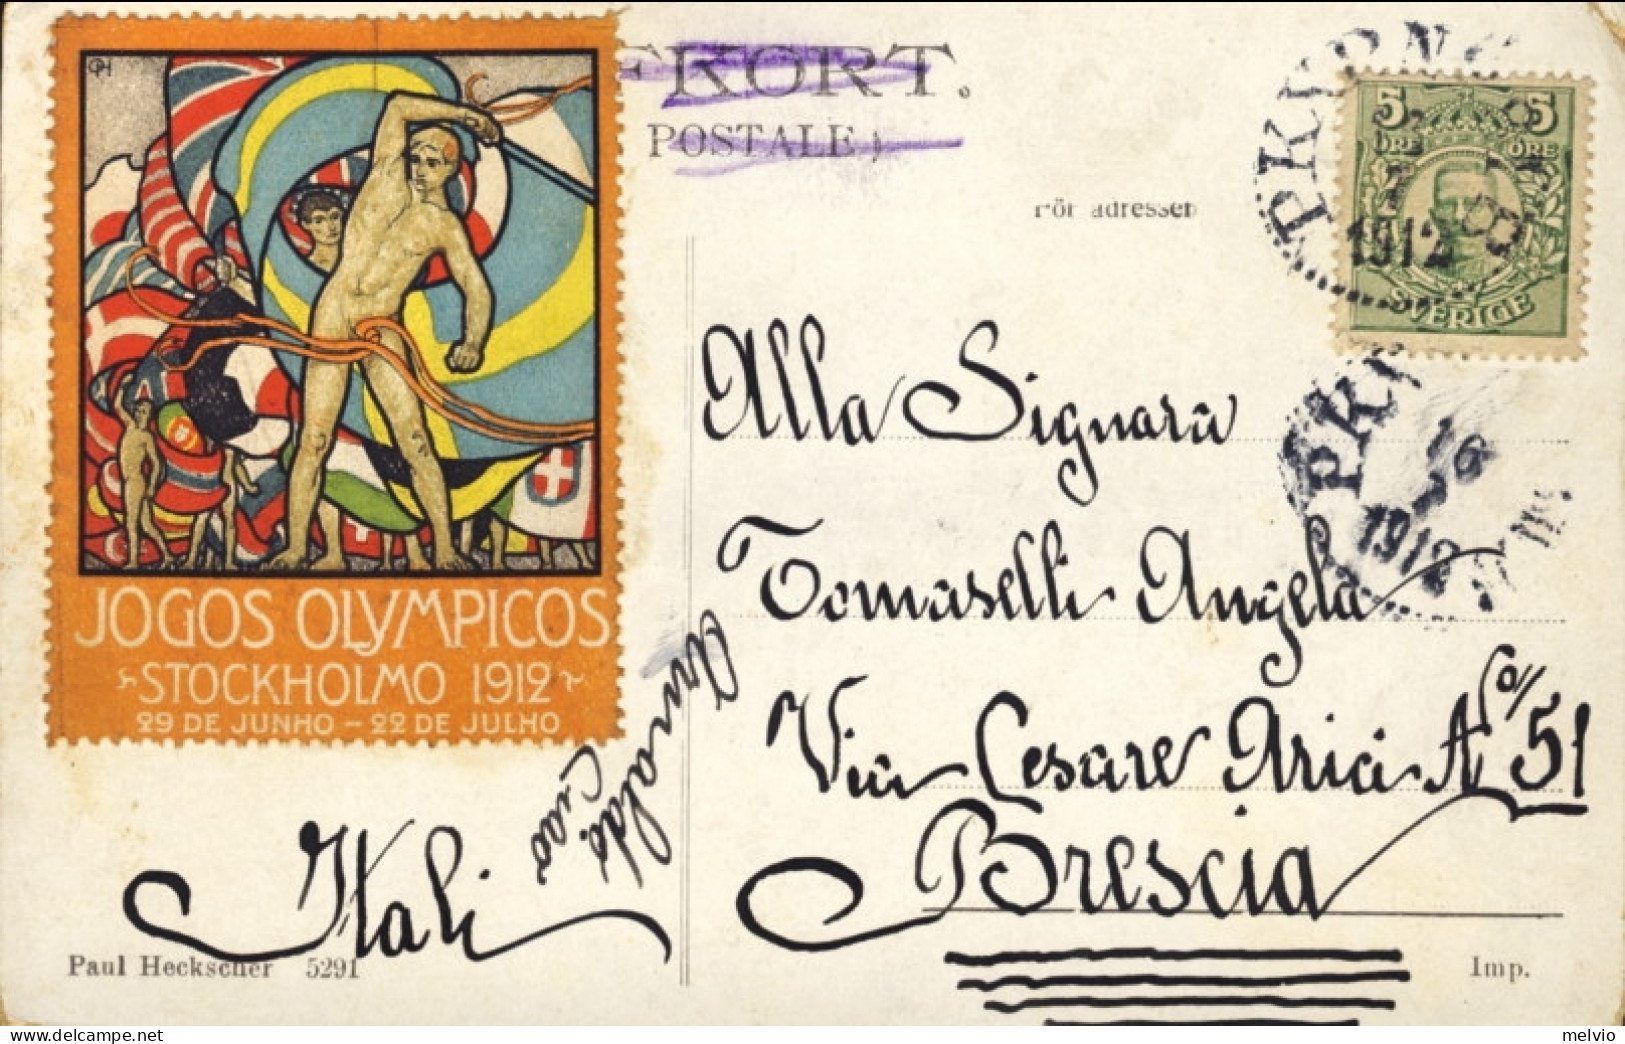 1912-Svezia Stockholm Kongl. Operan Cartolina Diretta A Brescia Con Raro Erinnof - Sweden